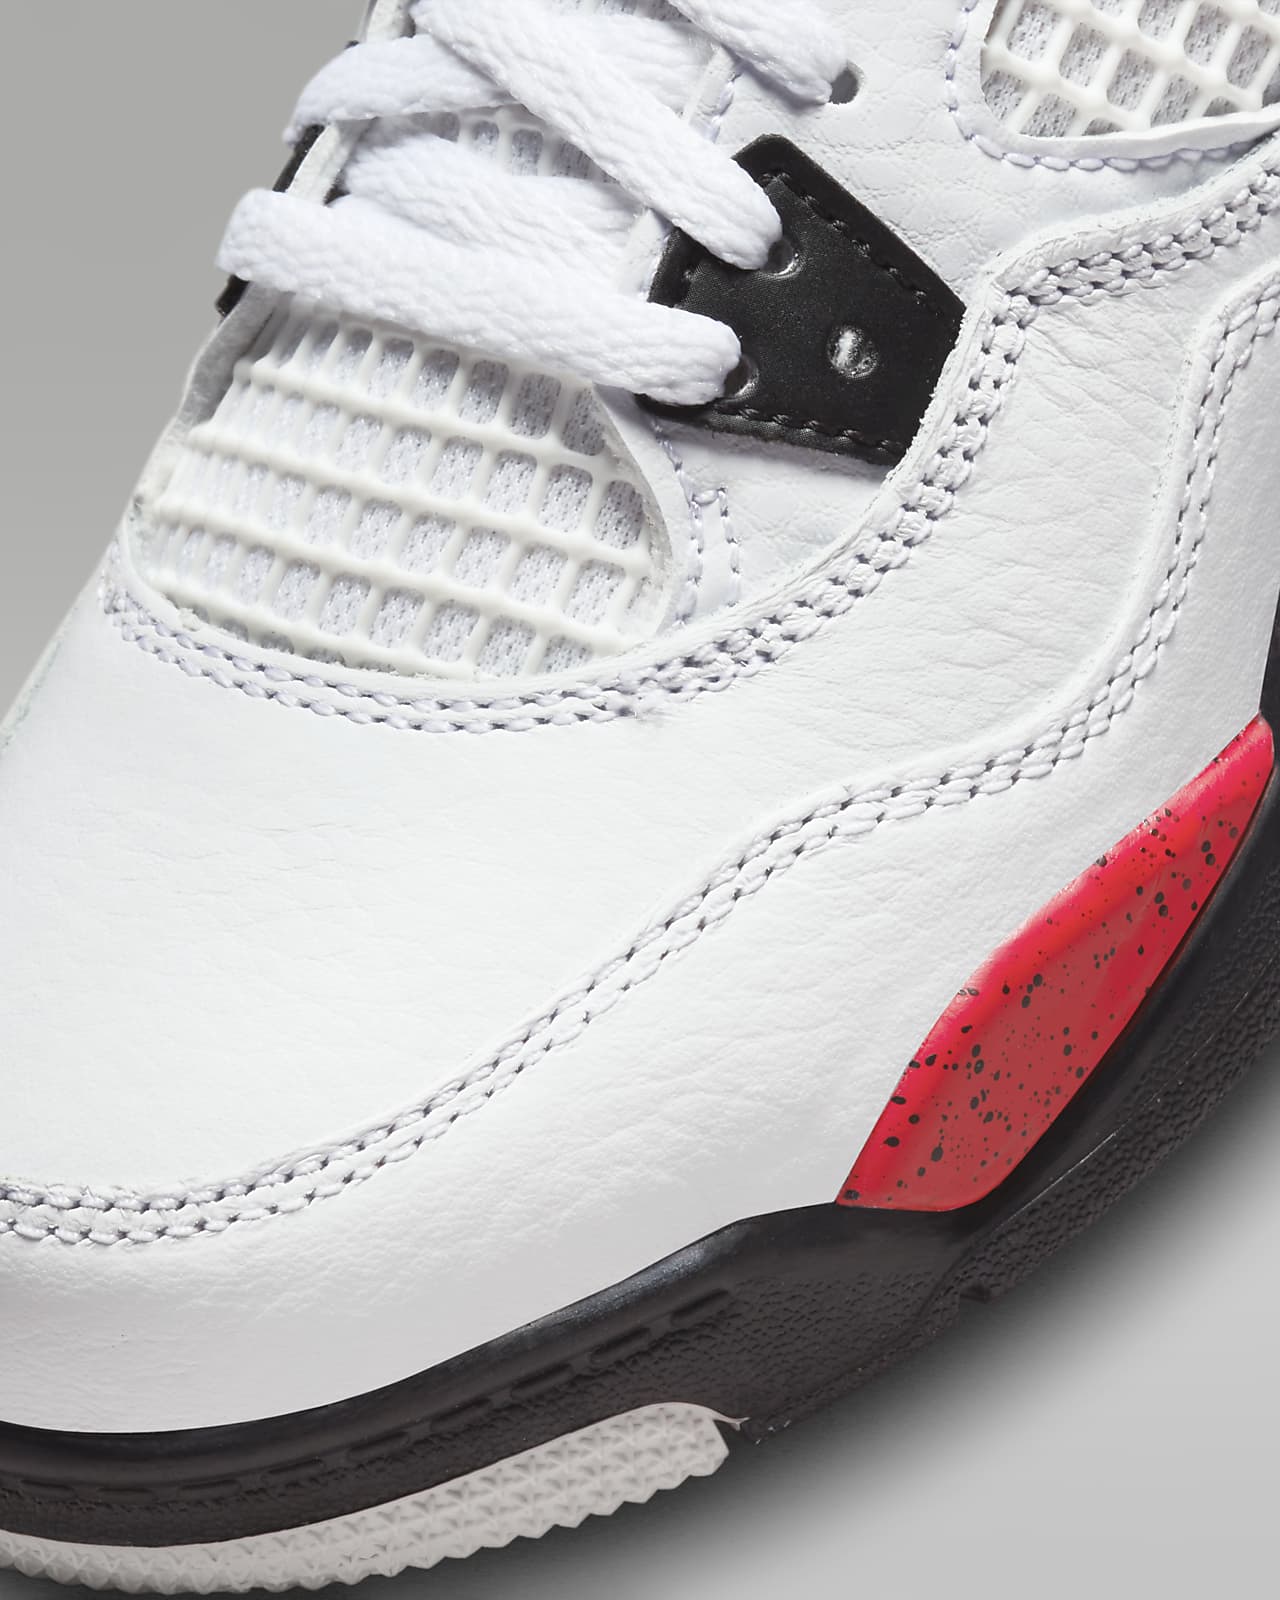 Nike Jordan Retro 4 White and Black - American Shoes